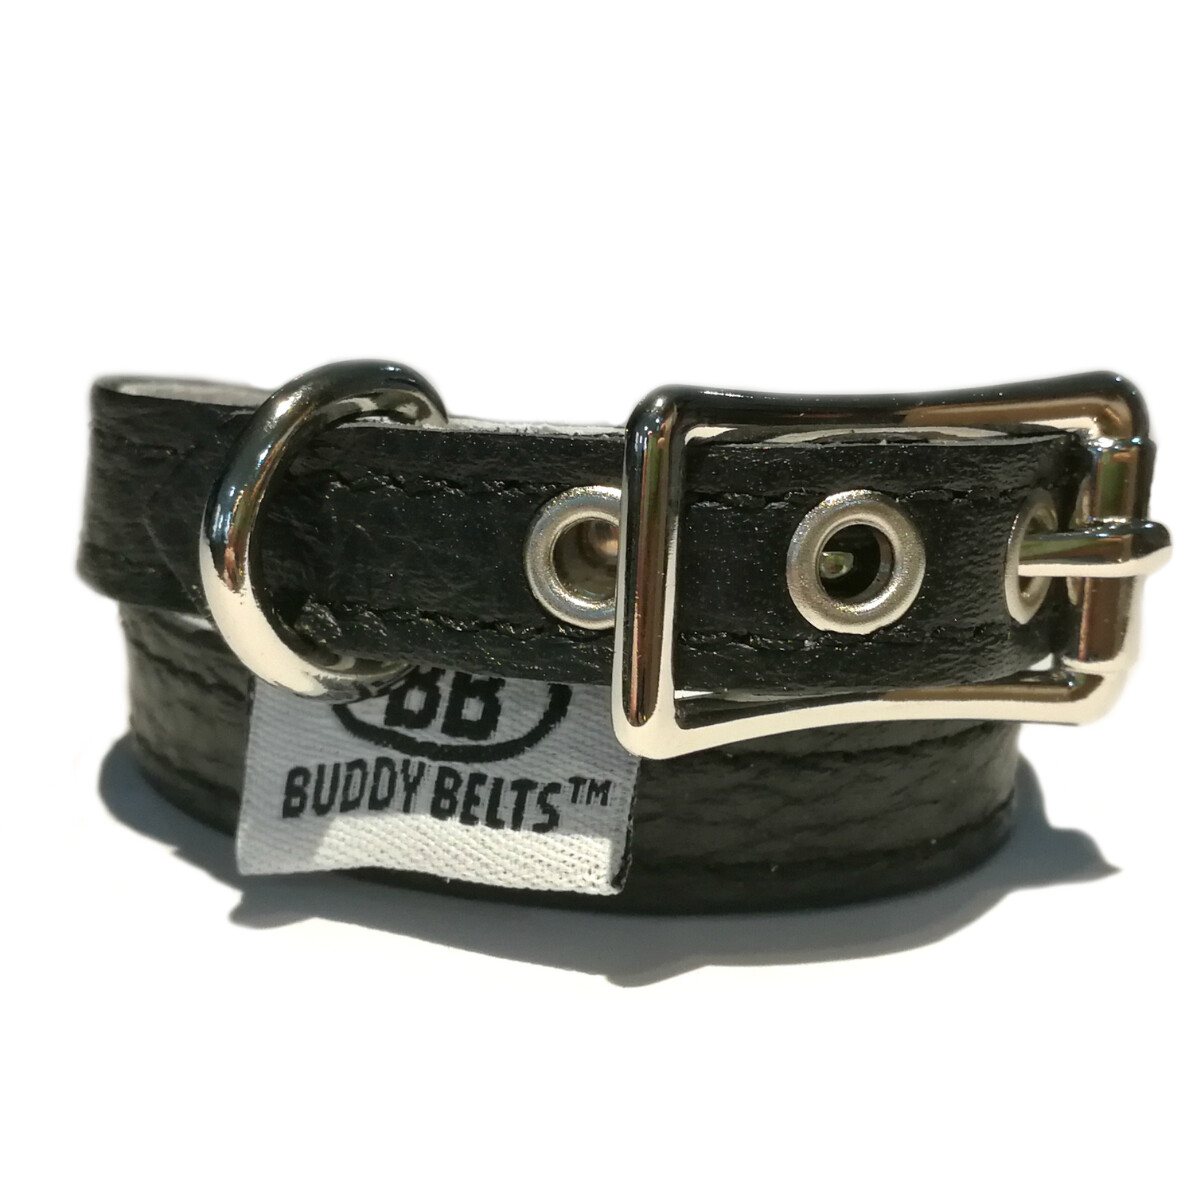 Buddy Belt Collar - Black